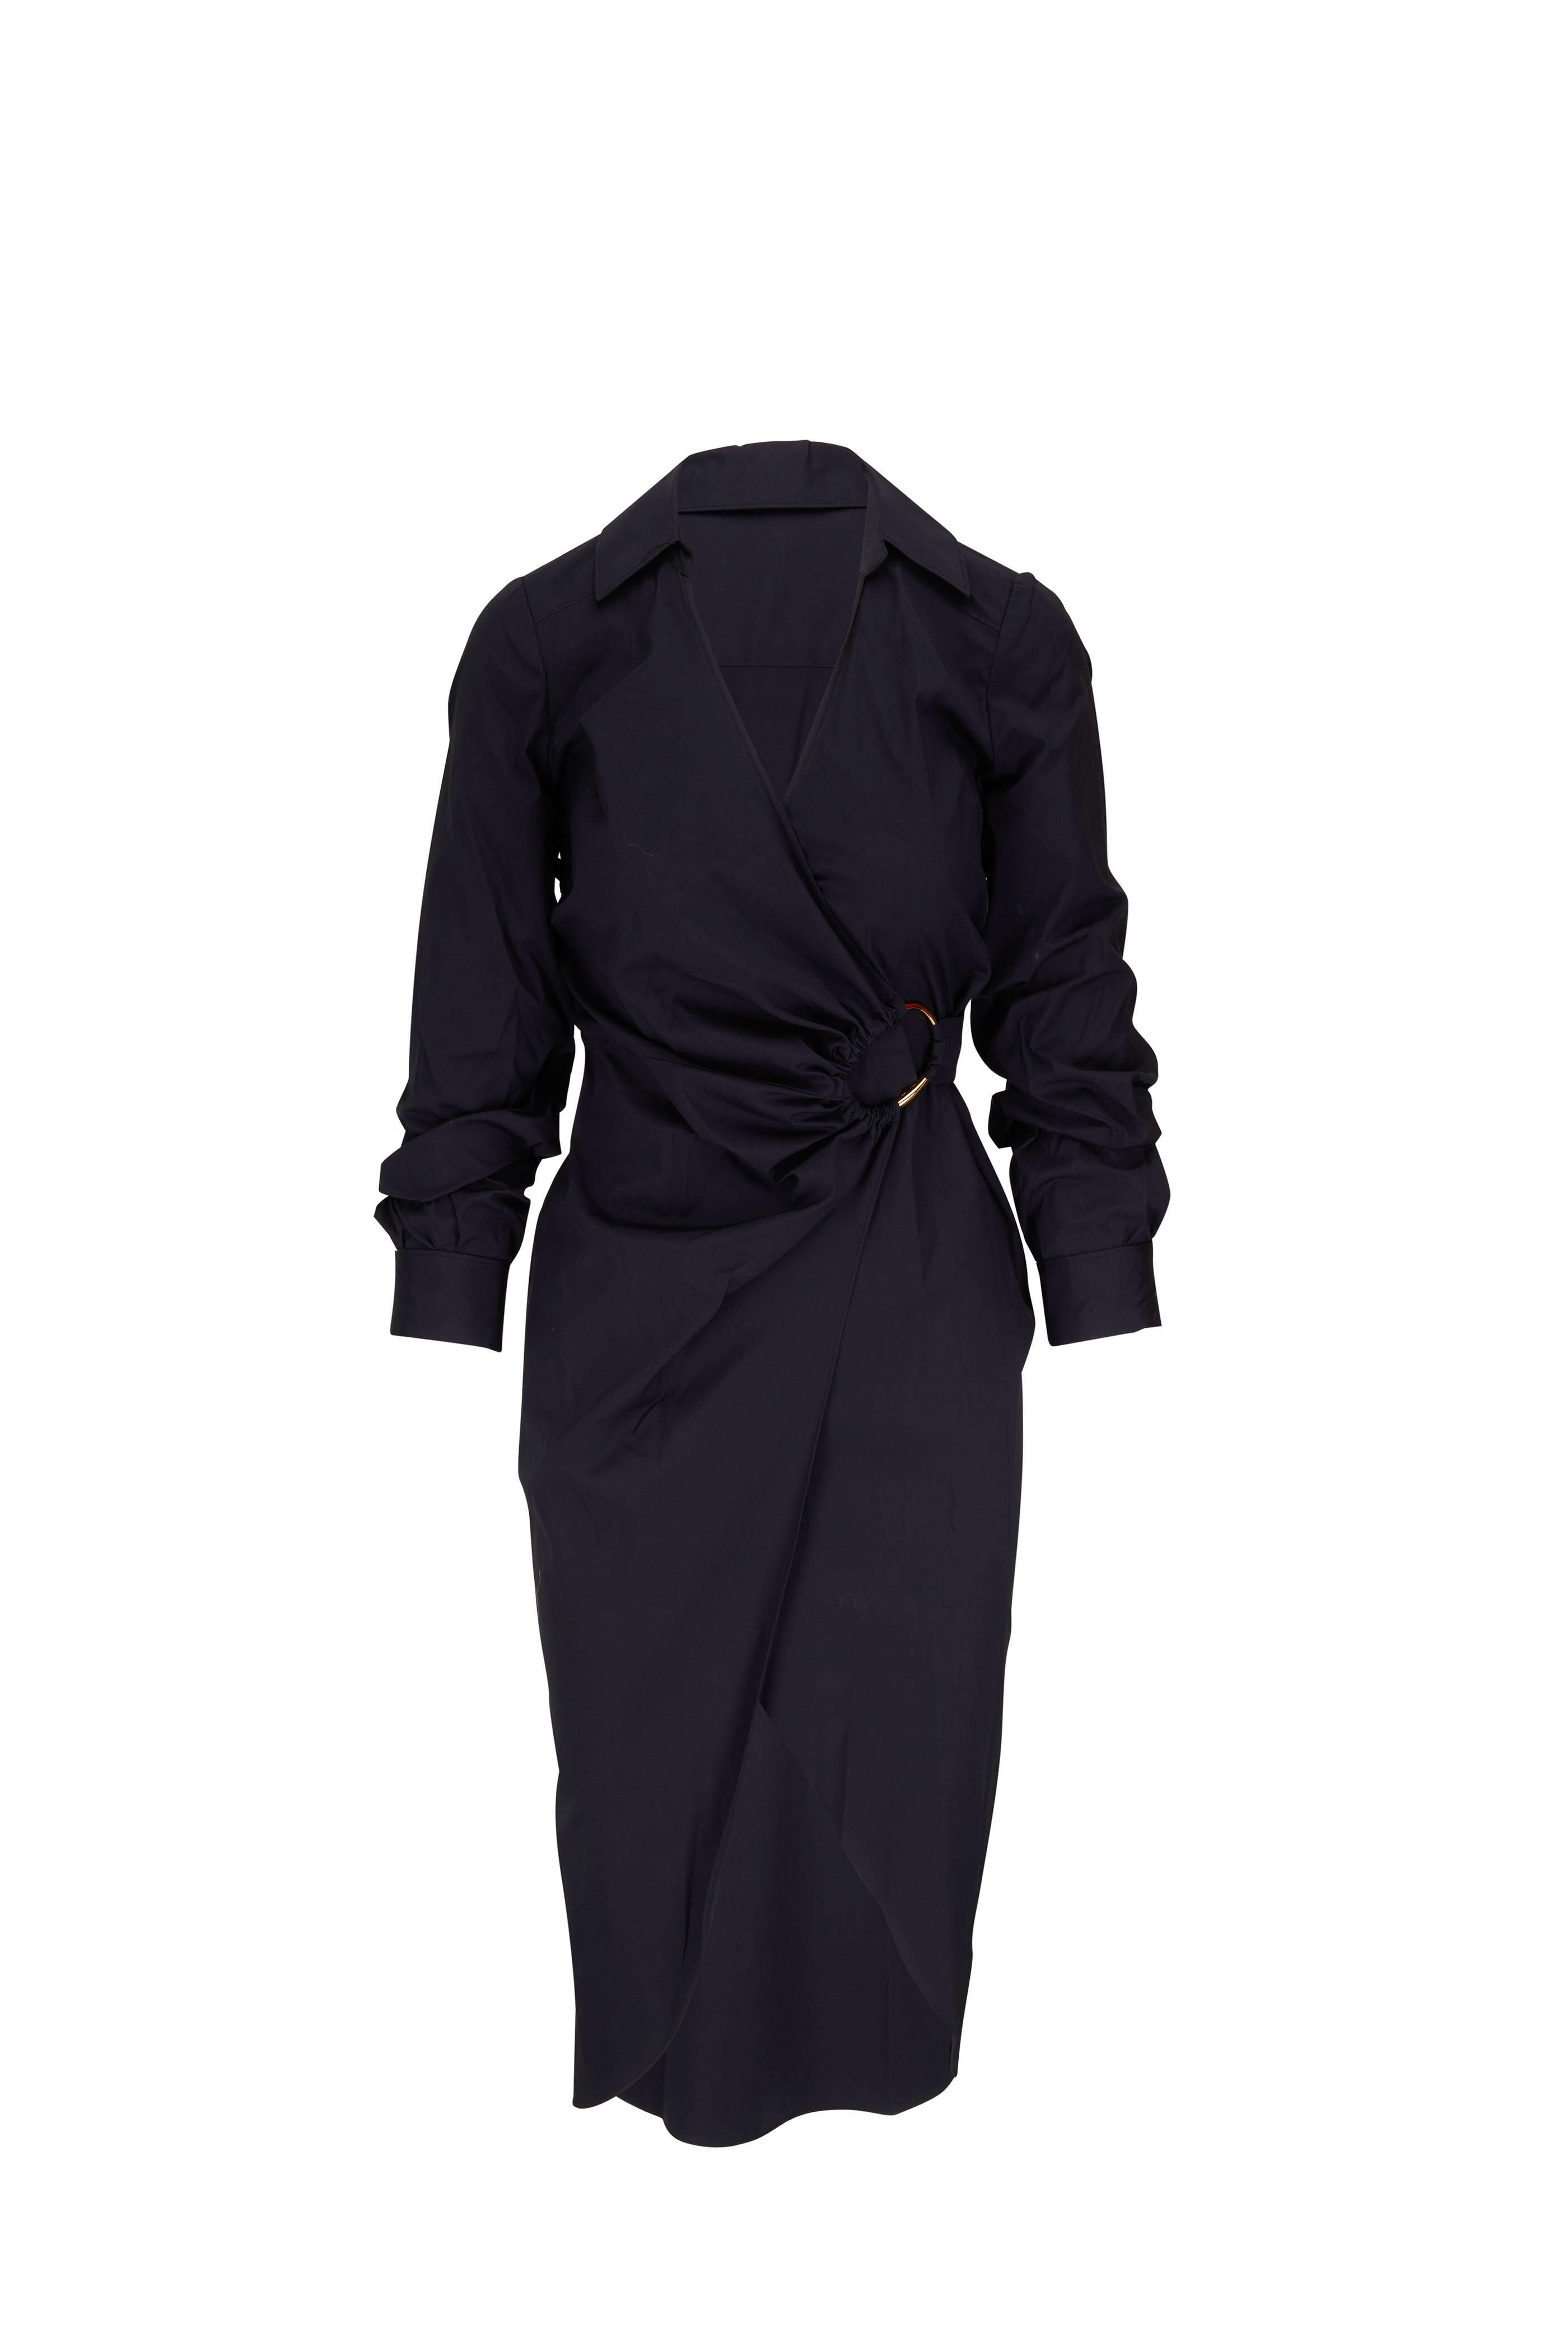 Veronica Beard - Wixson Black Multi Midi Dress